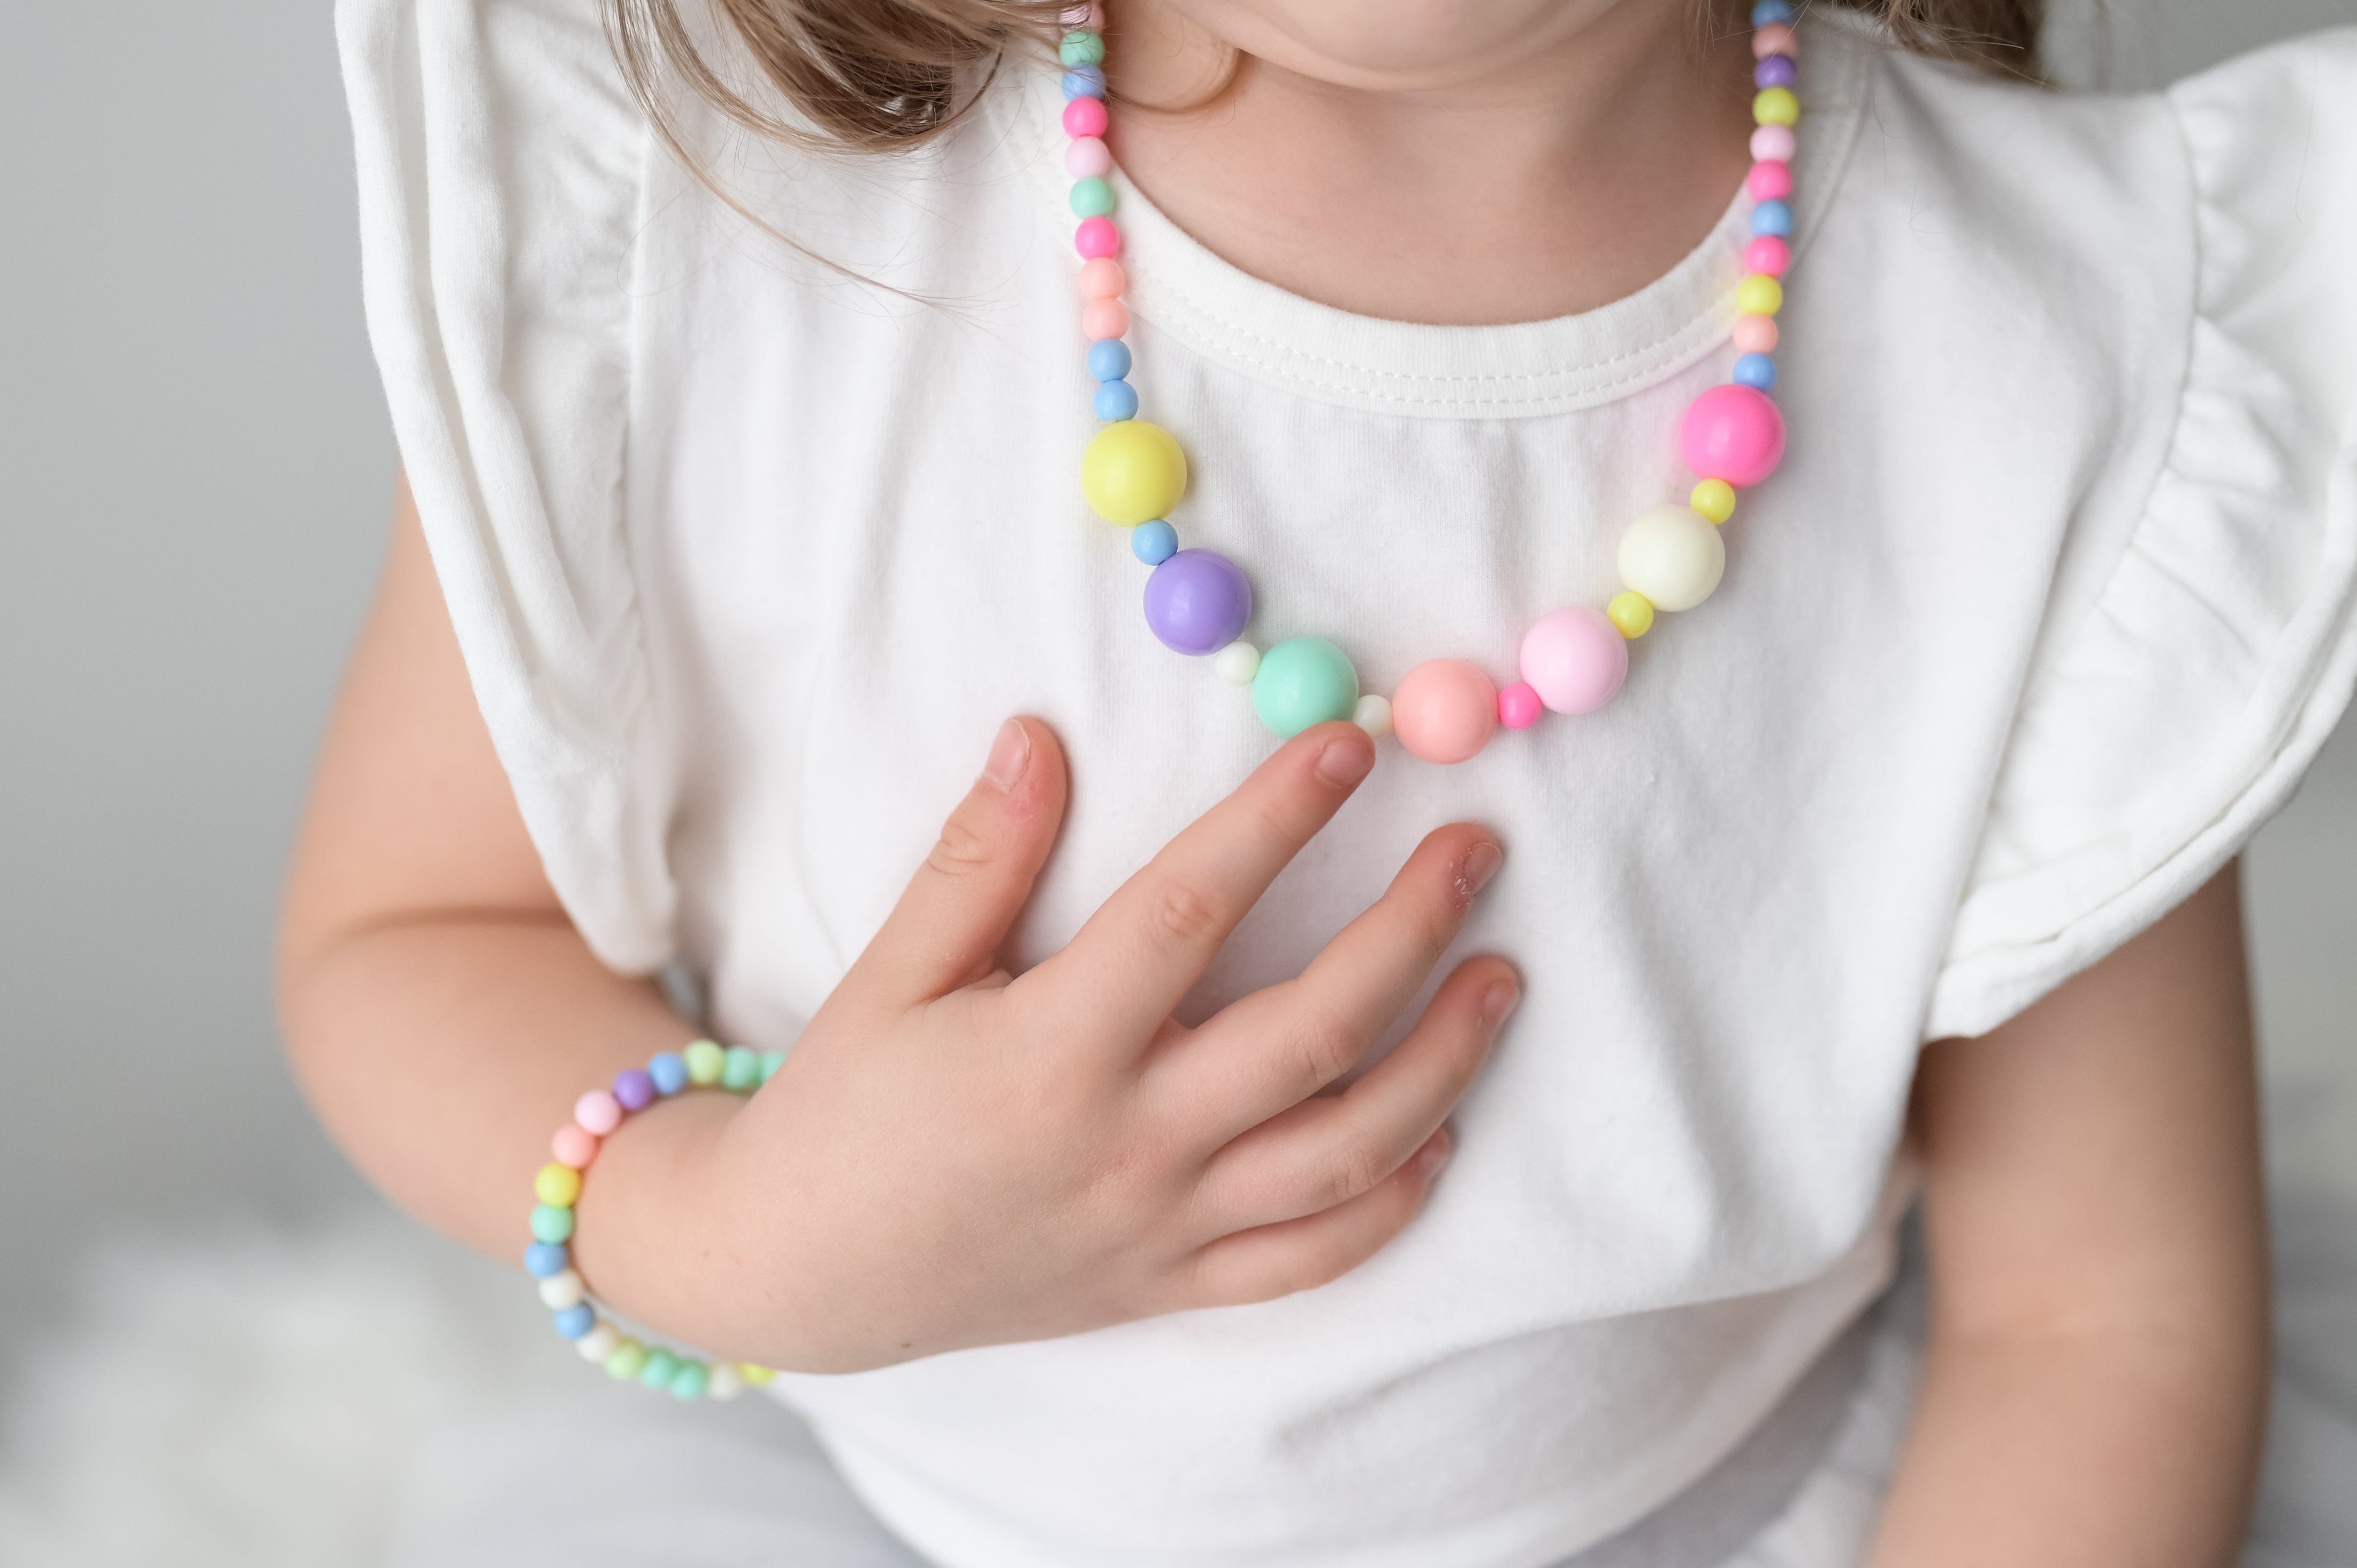 Children's Necklace & Bracelet Rainbow Set | Kids Jewelry | Gift Set For Girls